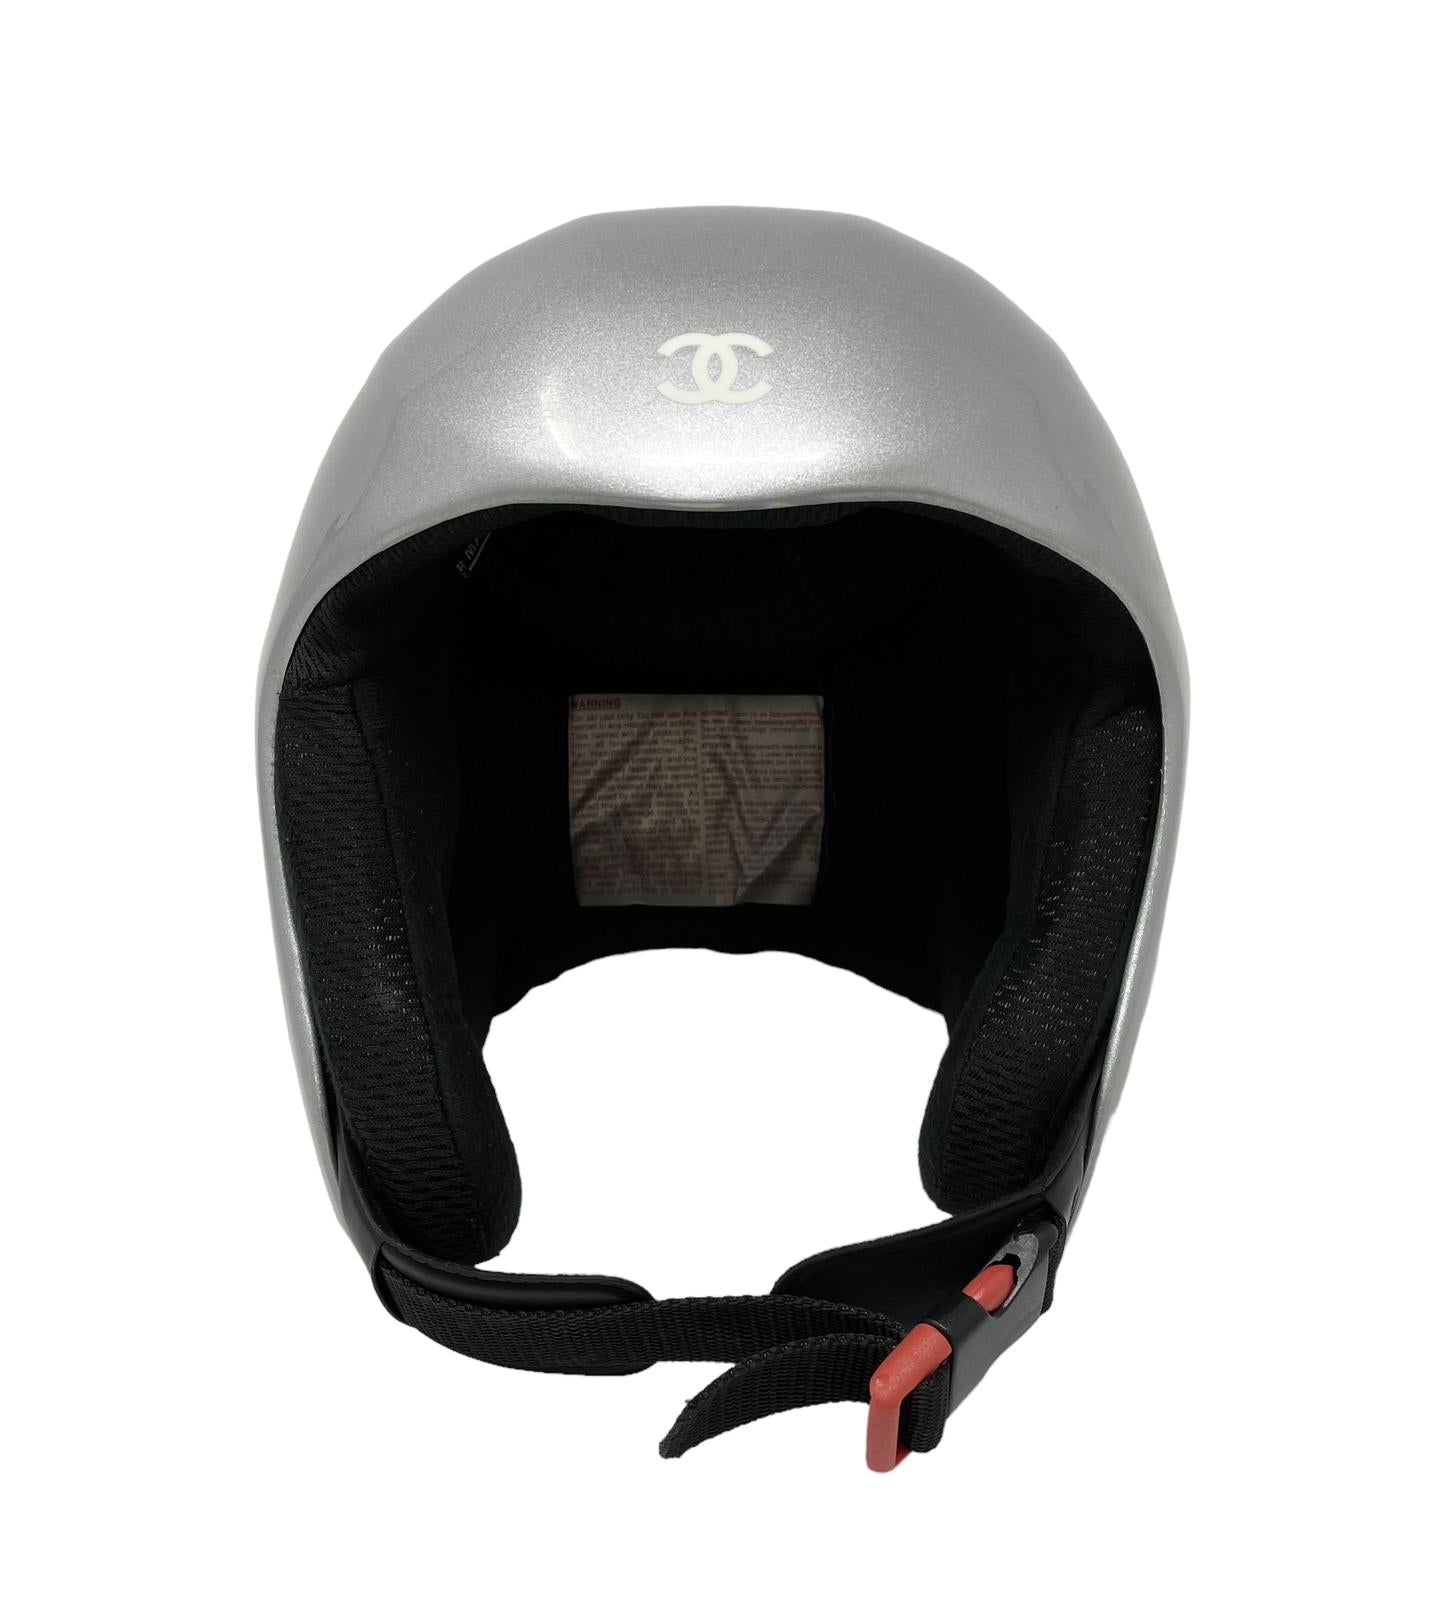 Chanel Silver Logo Helmet